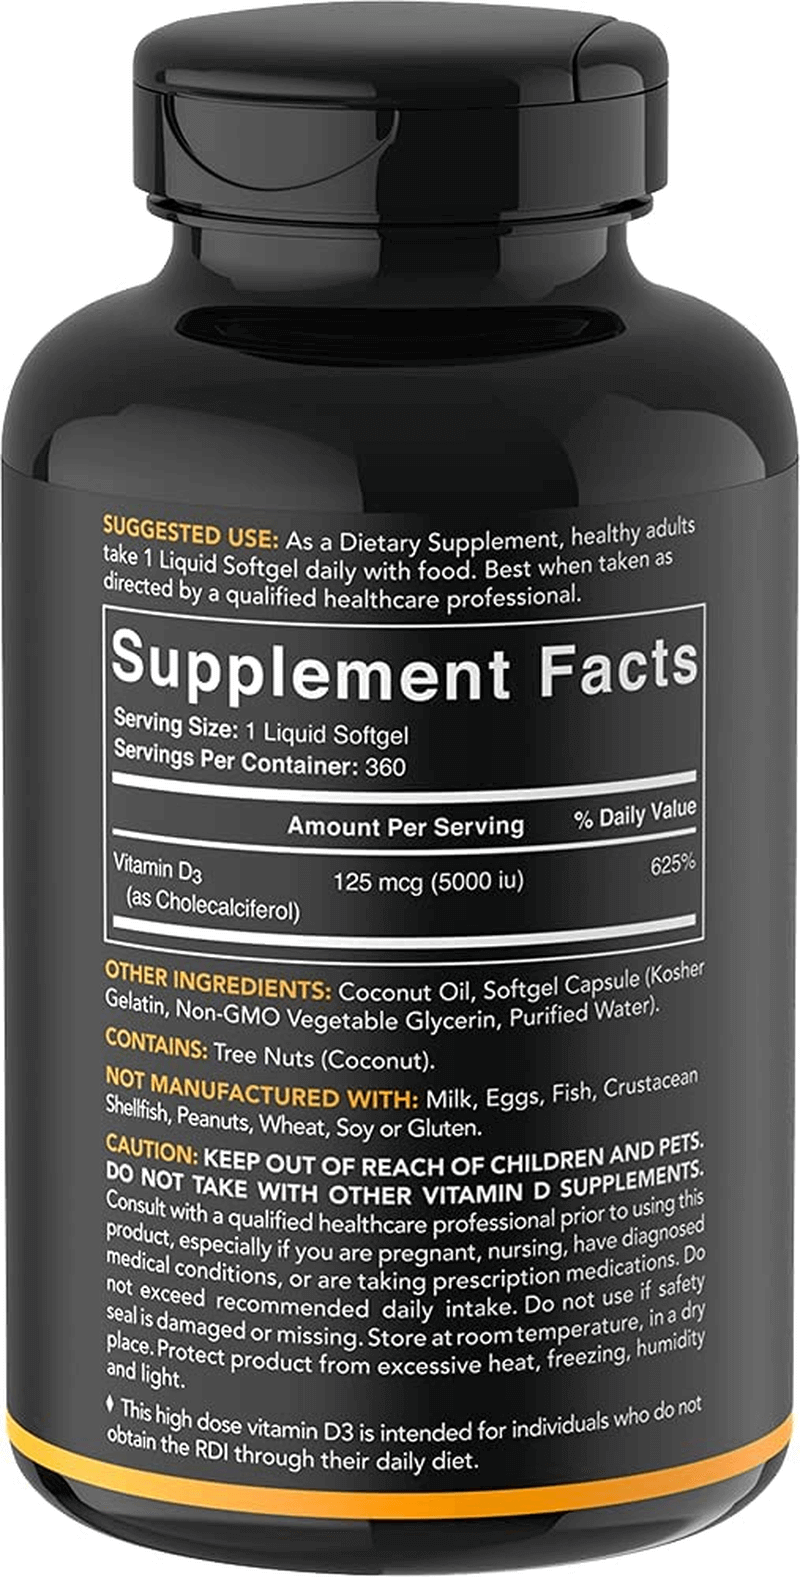 Sports Research 1000 Iu Vitamin D3 Supplement with Organic Coconut Oil - Vitamin D for Strong Bones & Immune Health - Supports Calcium Absorption - Non-Gmo - 25Mcg, 360 Mini Softgels for Adults - vitamenstore.com